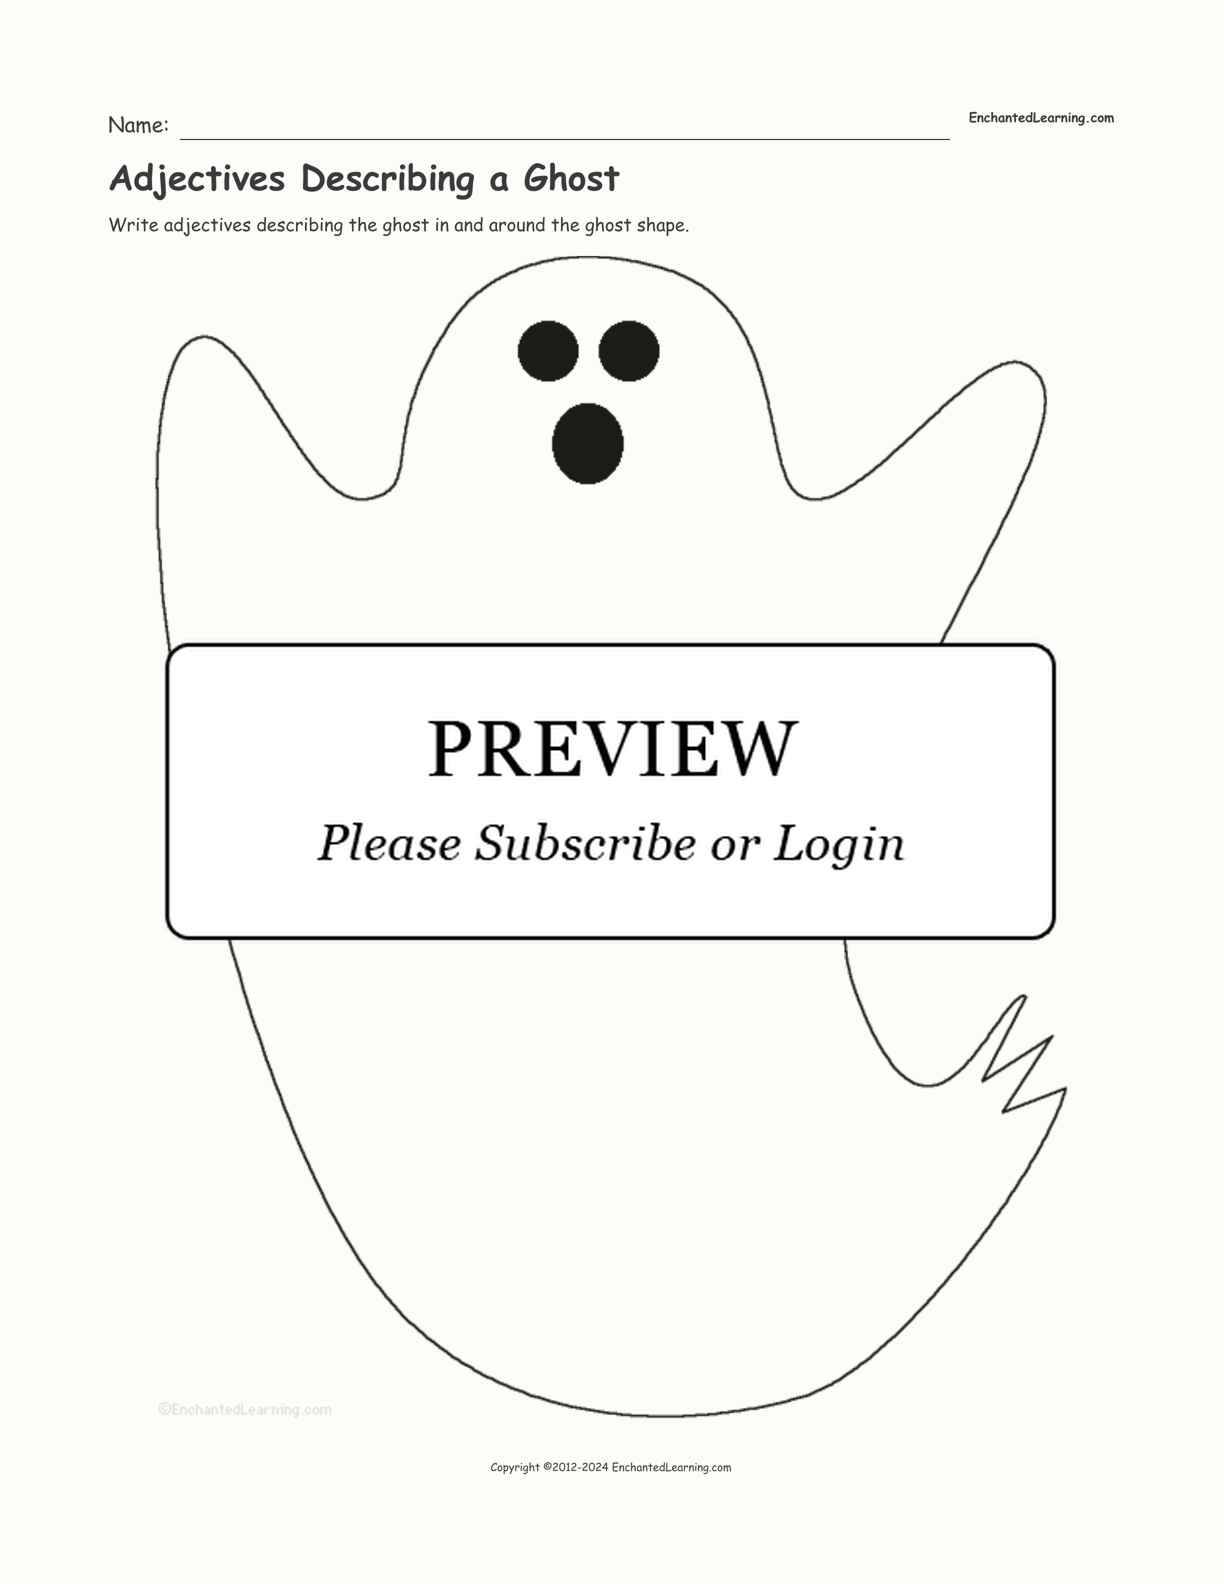 Adjectives Describing a Ghost interactive printout page 1